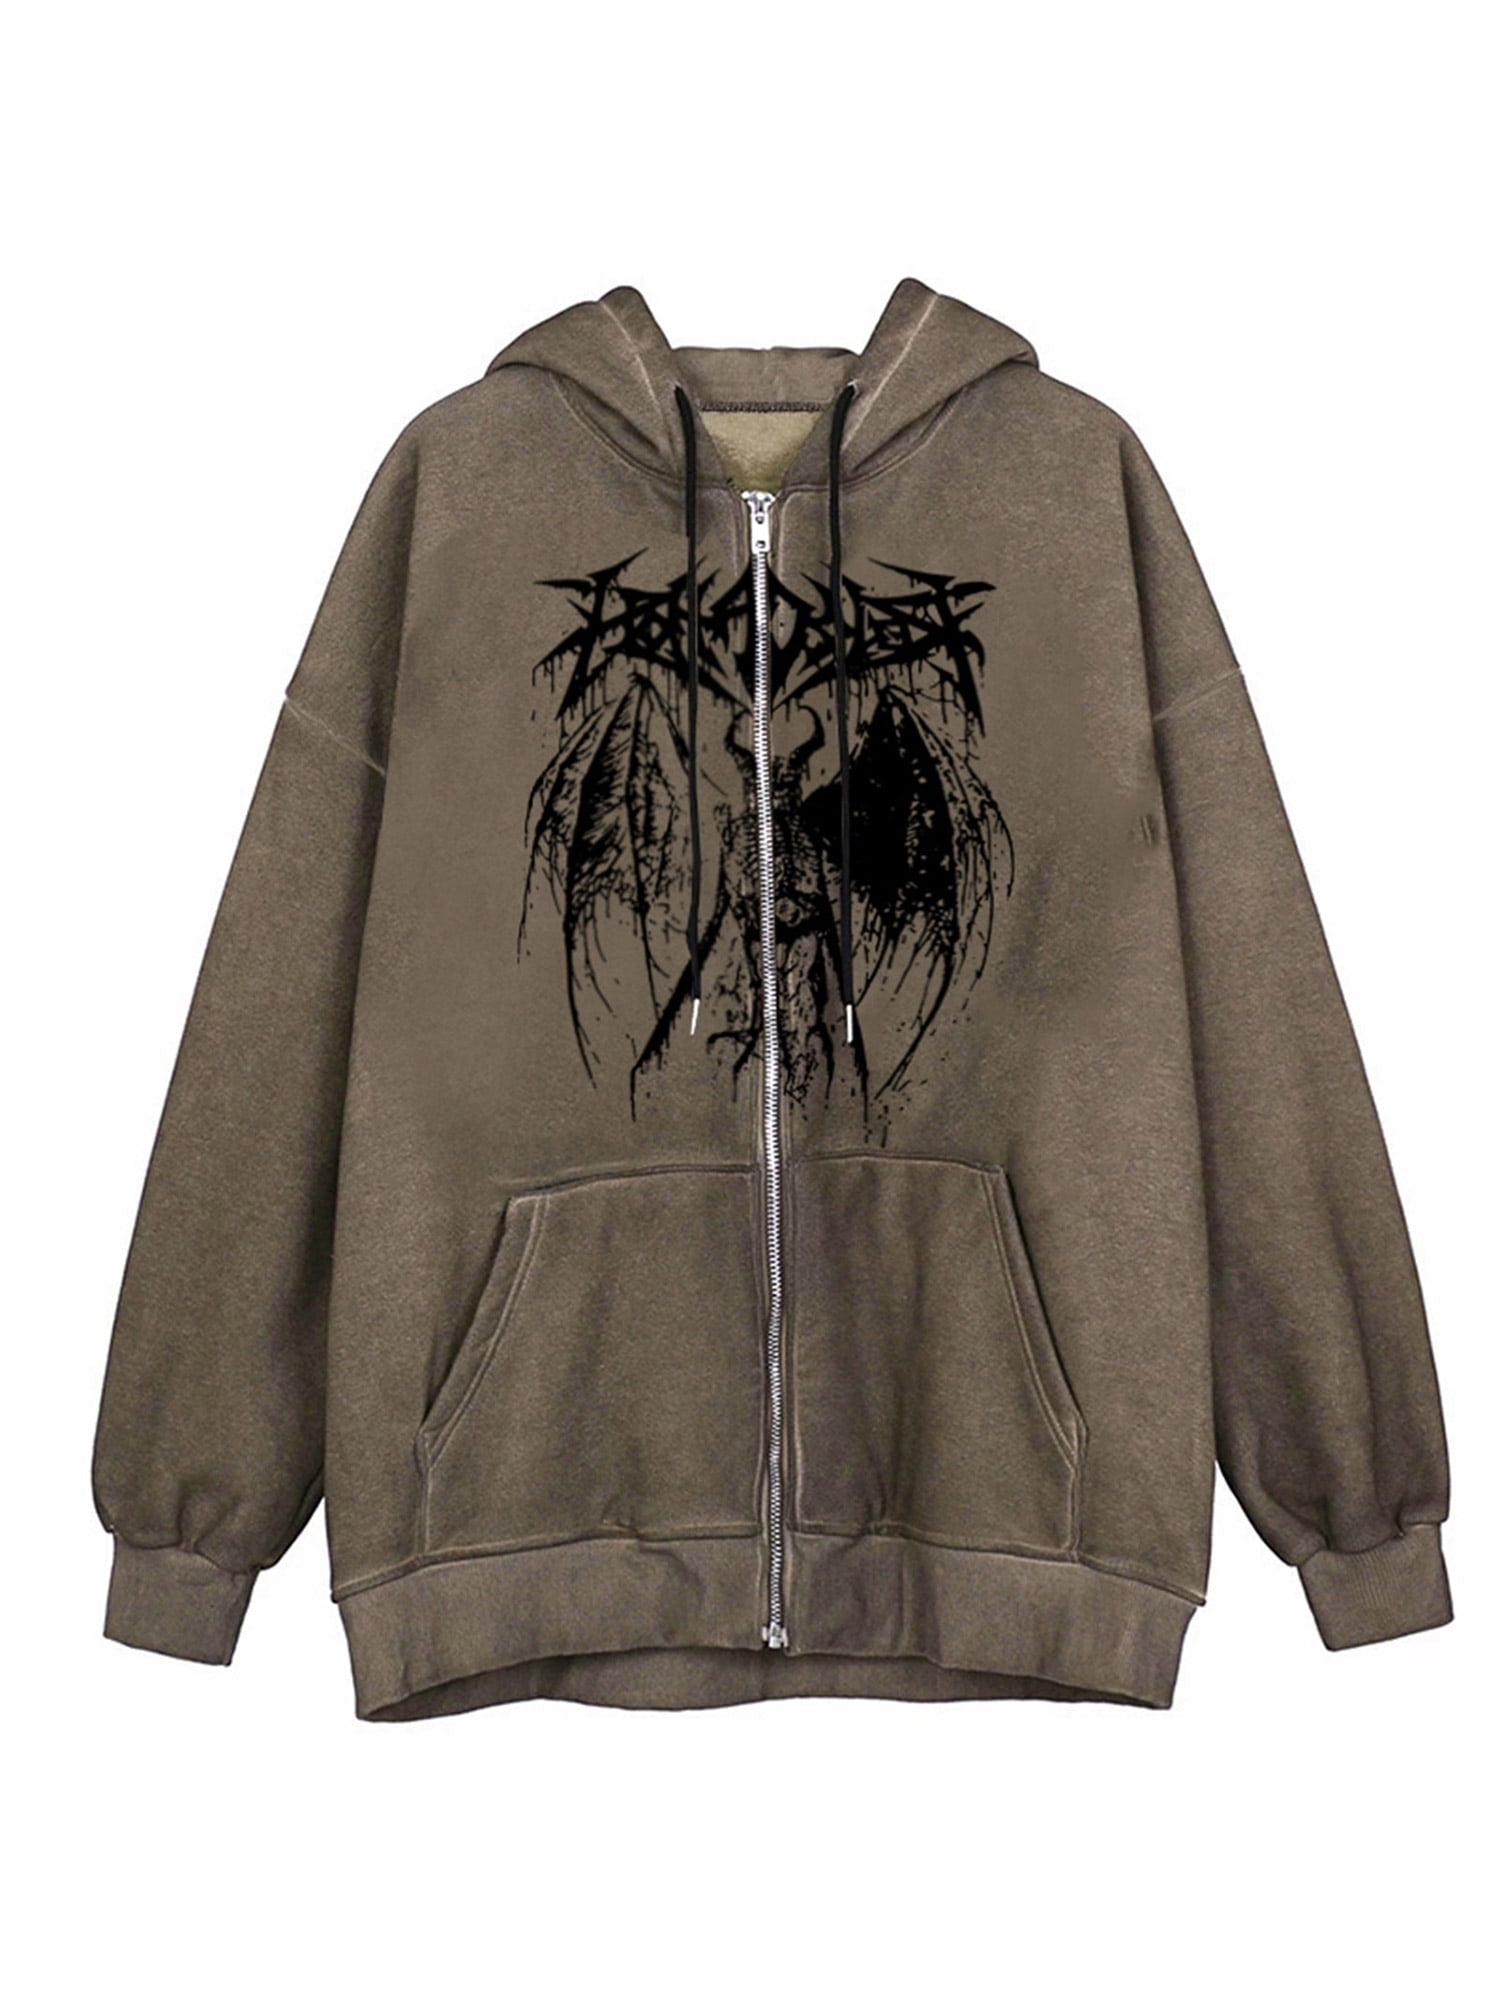 Extra long Hooded jean trench coat for men Black Loose Zipper Punk rock  Hiphop Denim outerwear Autumn Winter